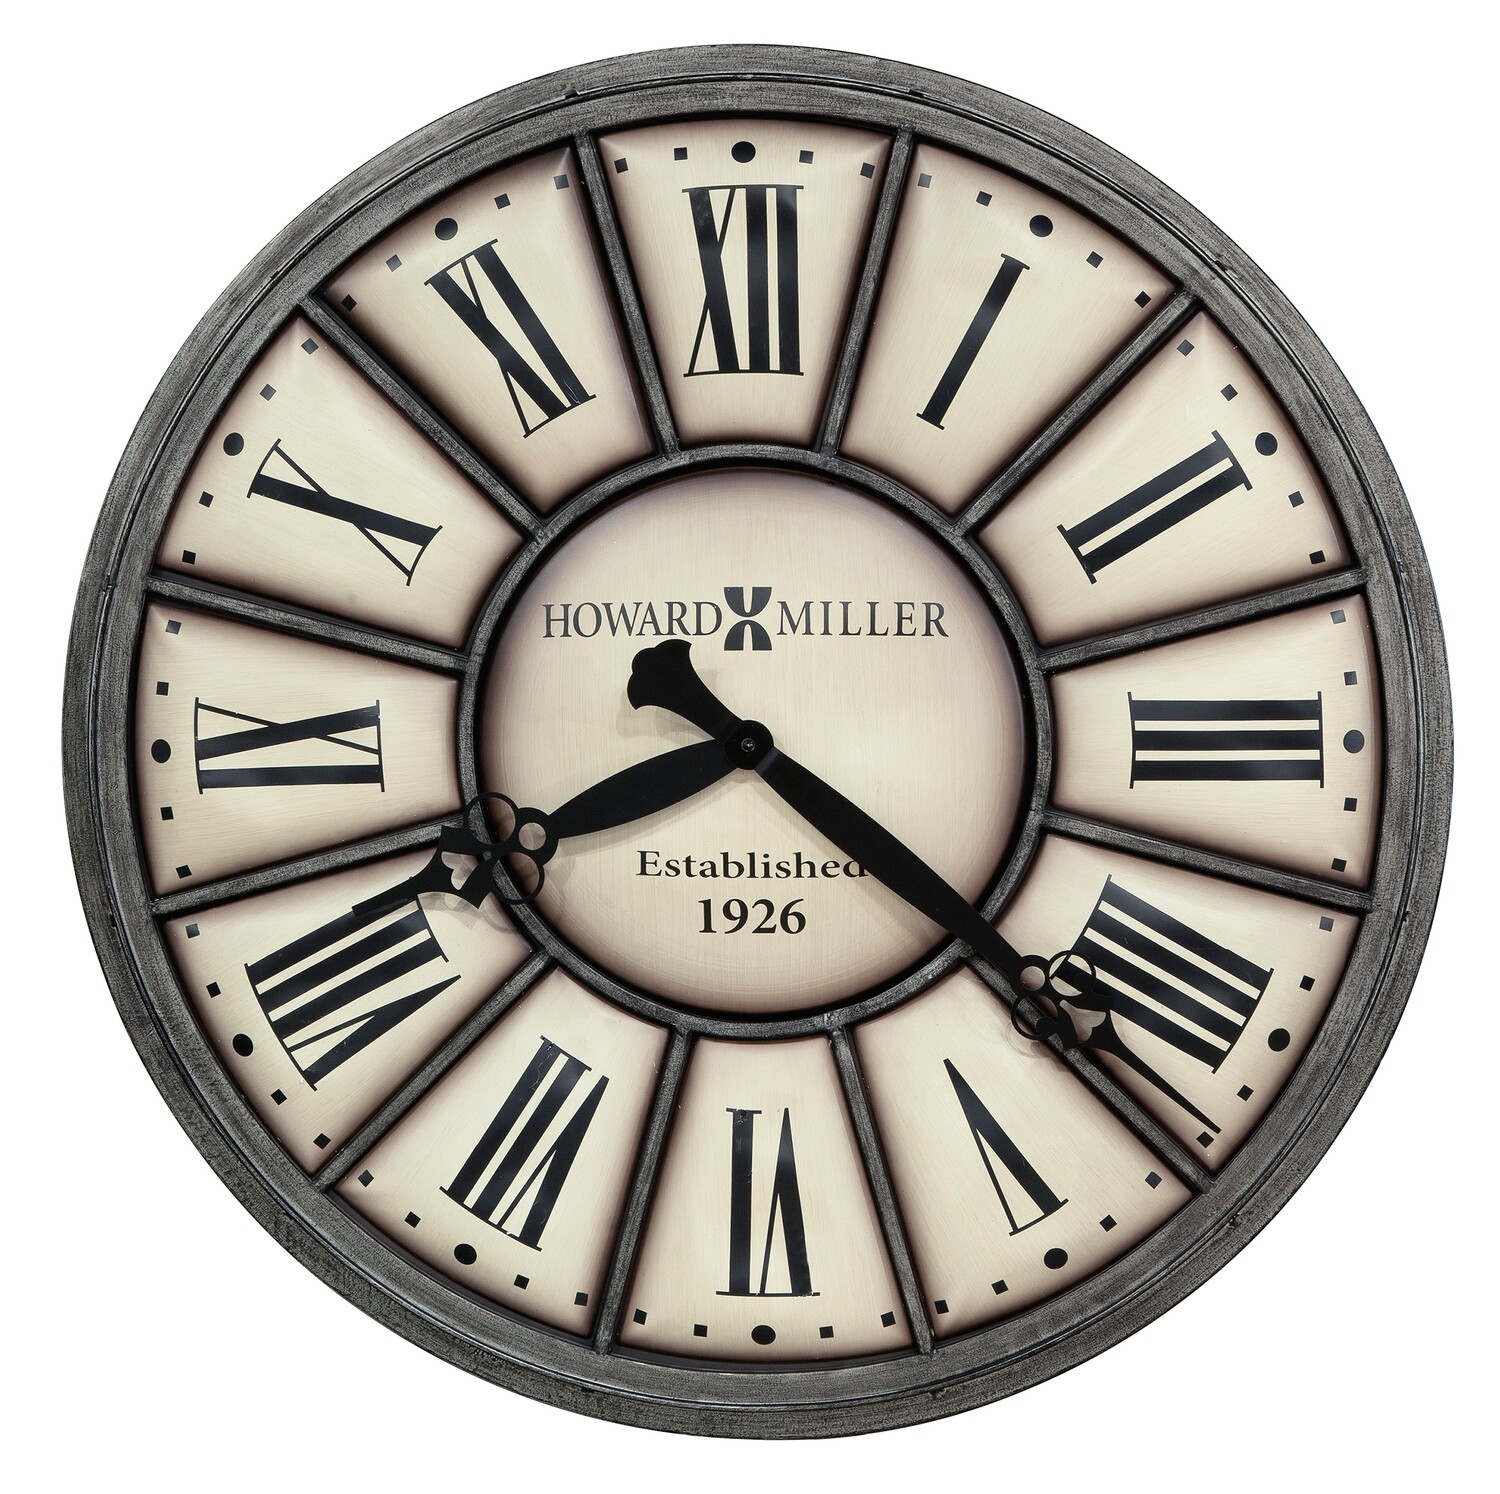 Howard Miller Company Time II 625613 Wall Clock